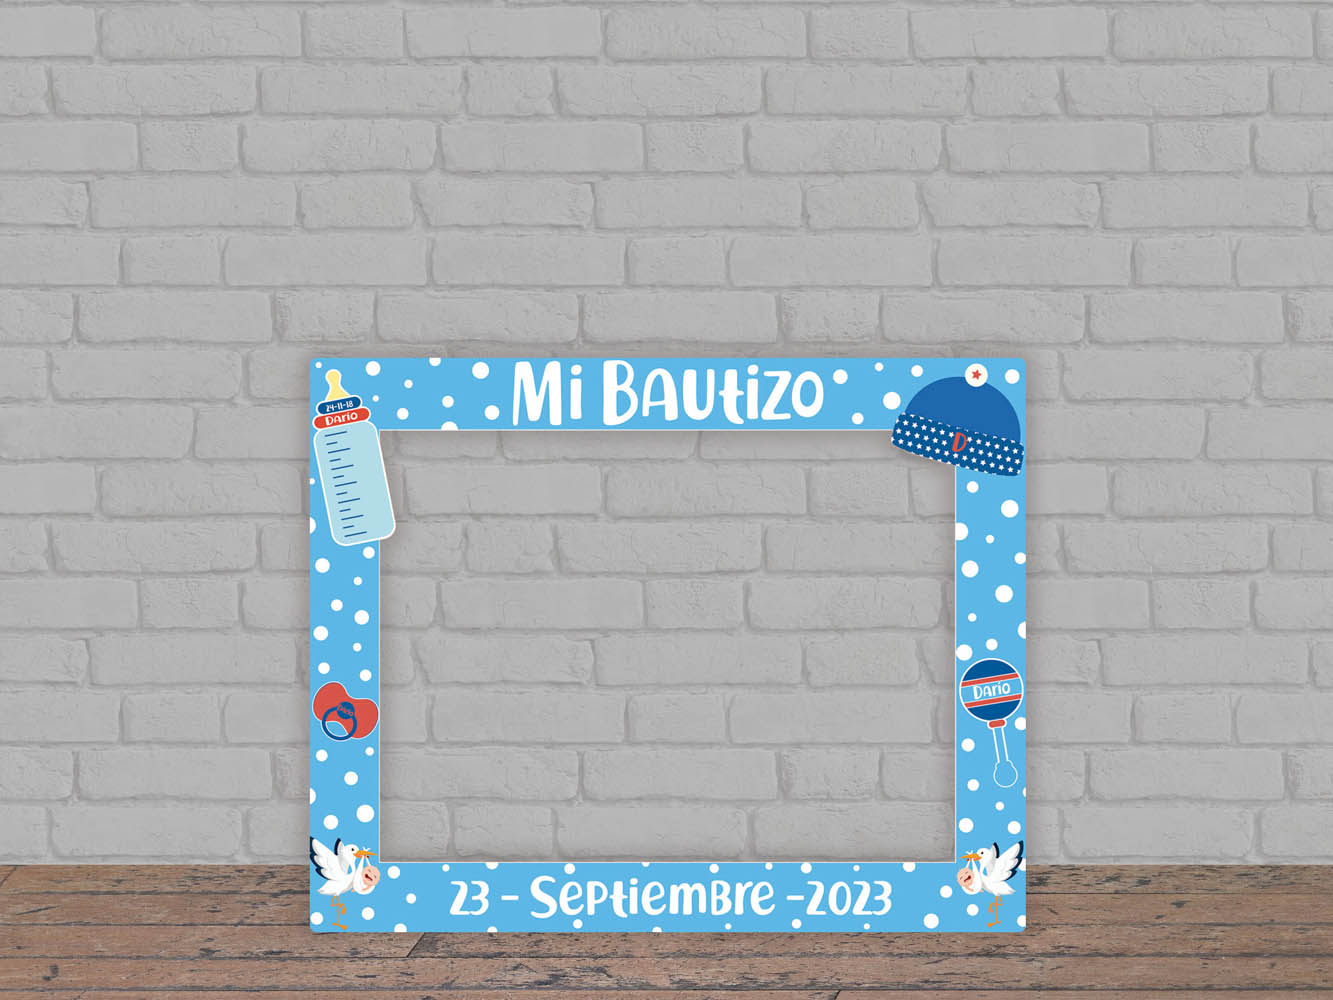 doys on X: Photocall Marco para #Bautizo totalmente personalizado en  diferentes tamaños y colores con envío gratis #Photocall #Bautizo #FIESTA # bautizos #bautizoniño #bautizoniña    / X